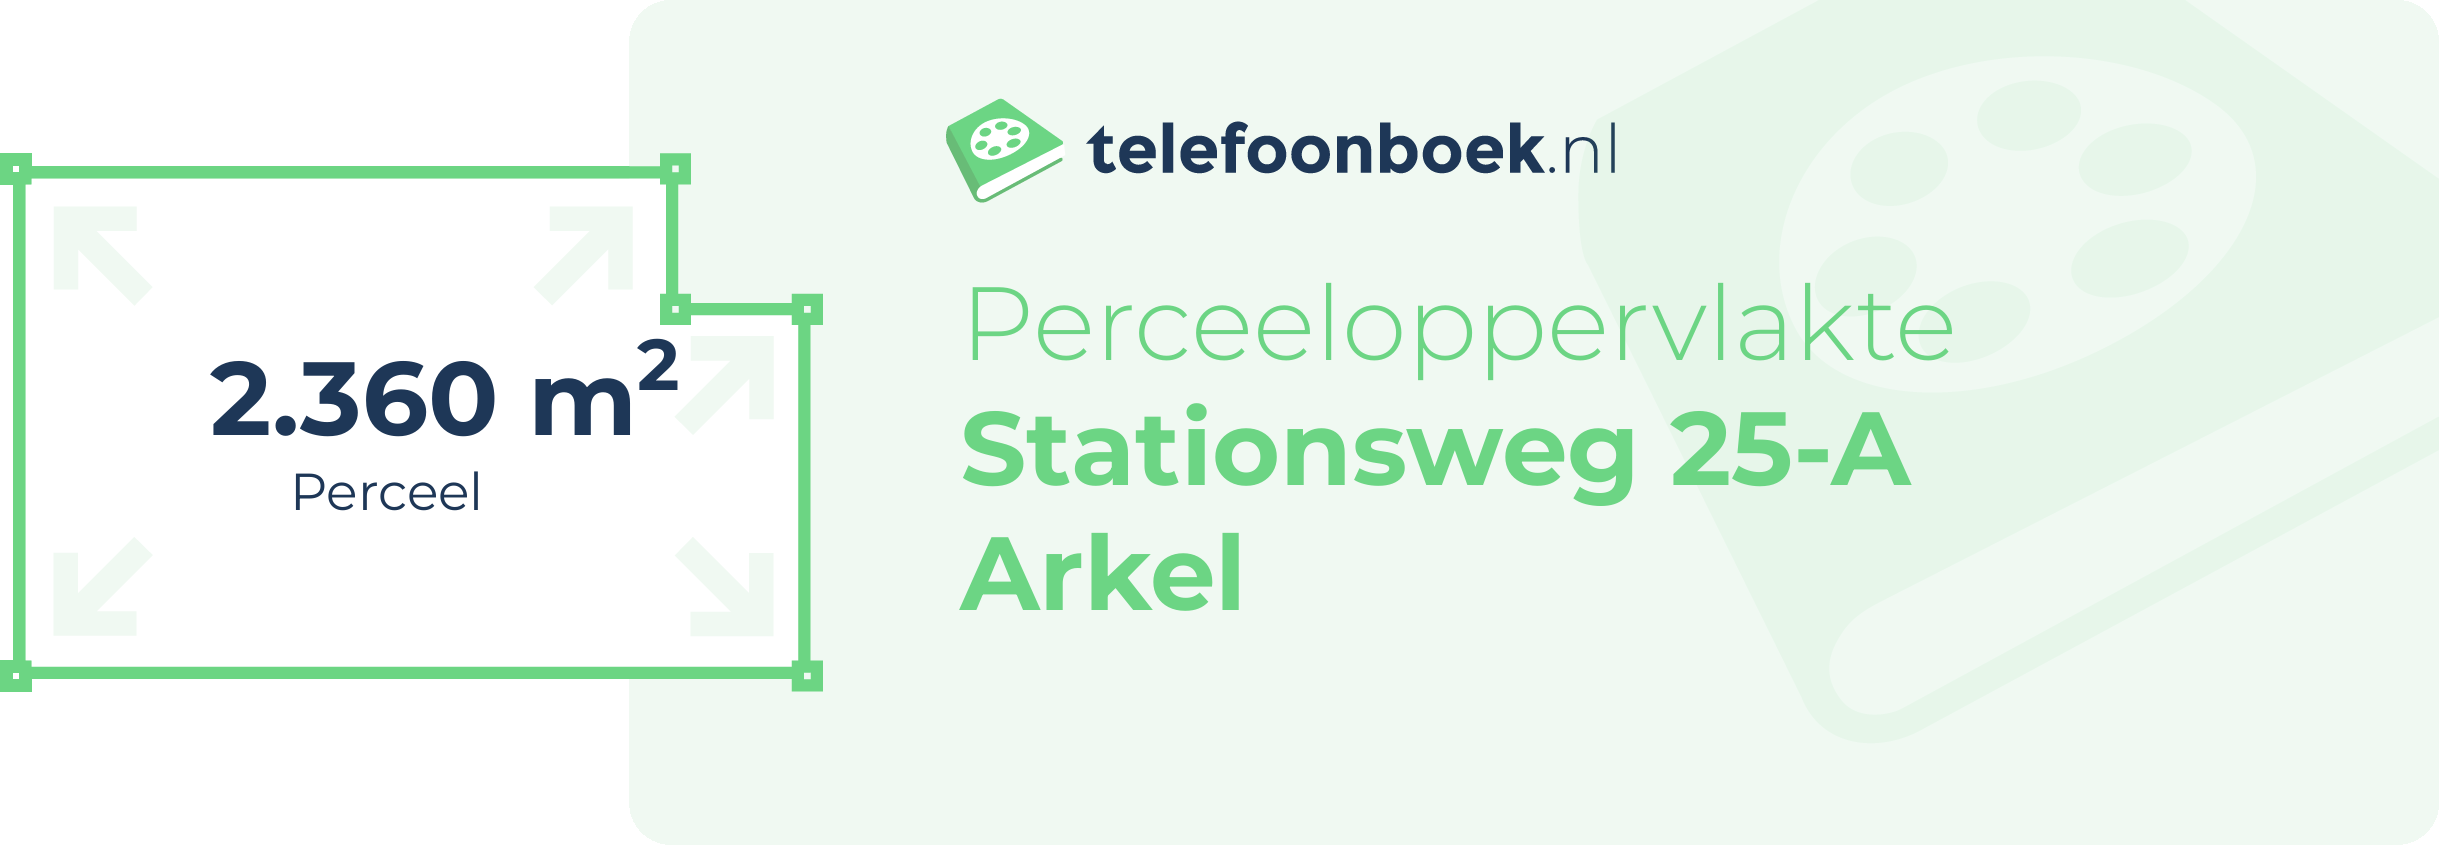 Perceeloppervlakte Stationsweg 25-A Arkel